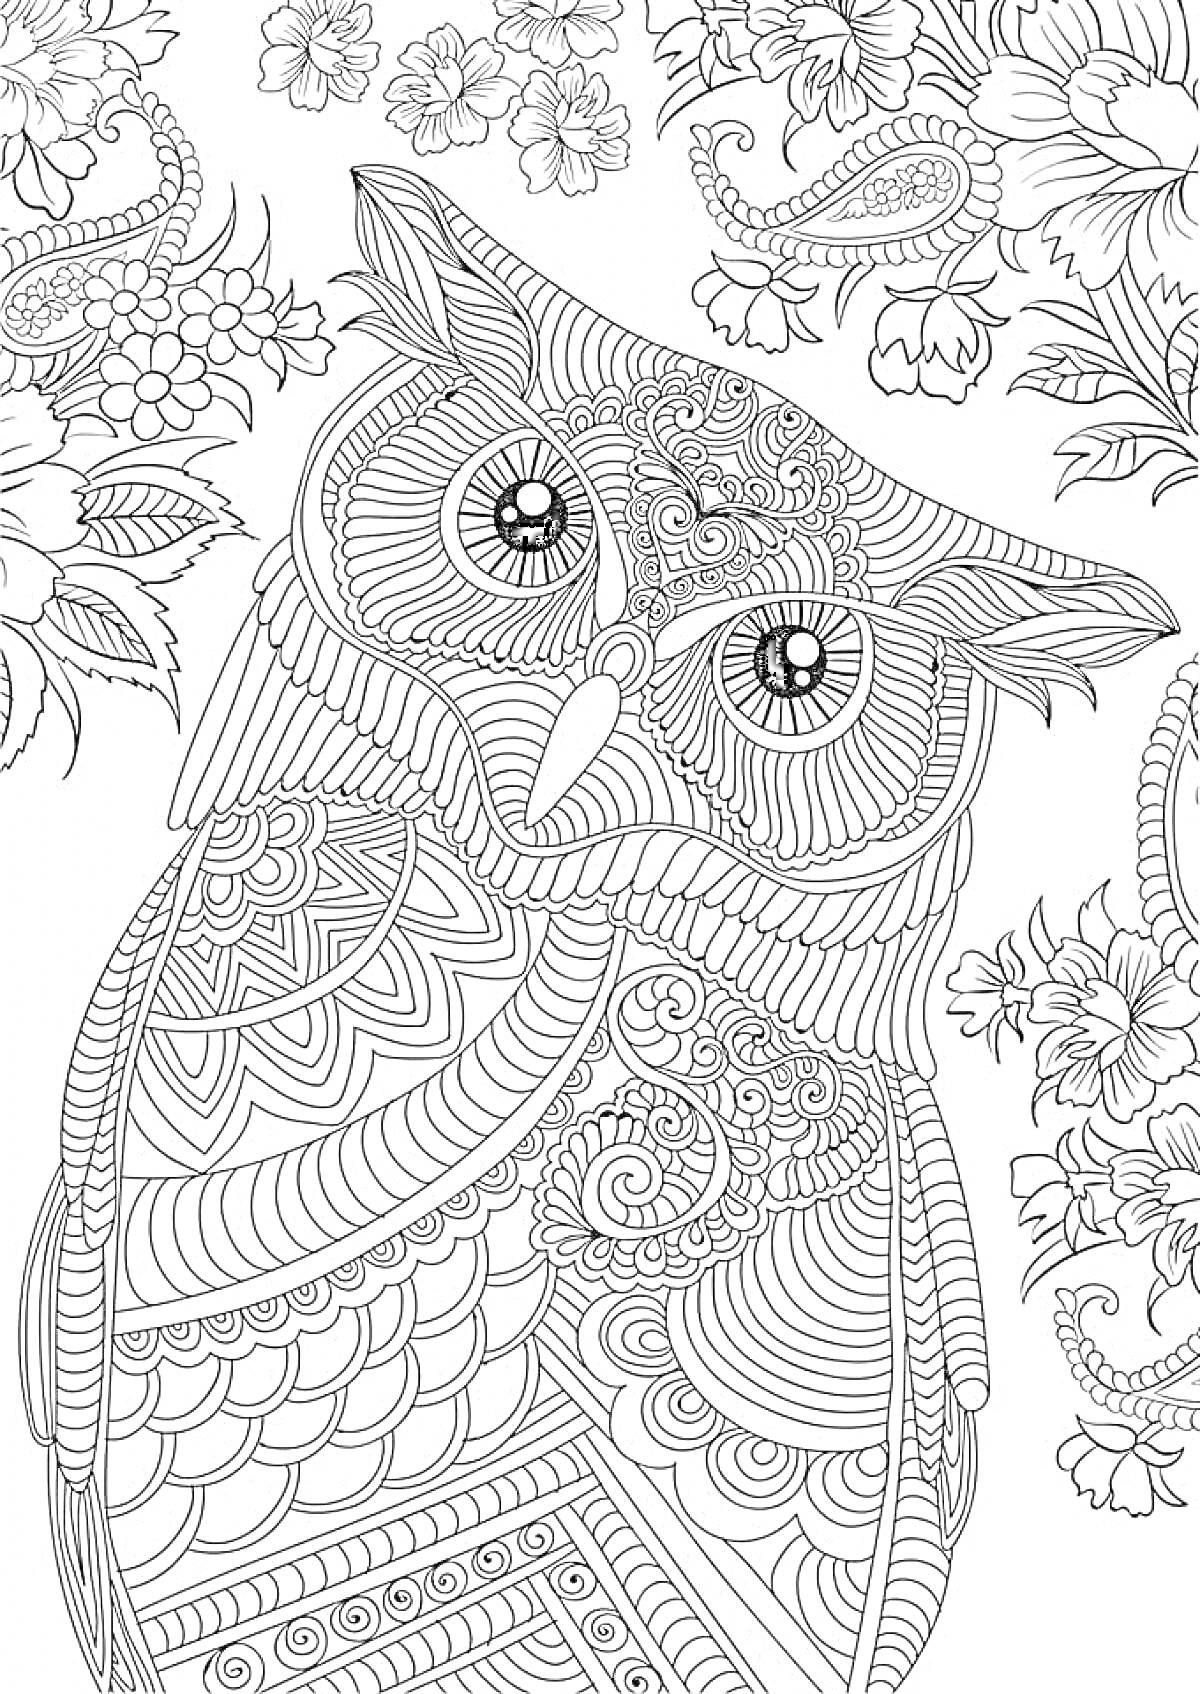 Раскраска Антистресс раскраска сова с узорами и цветами